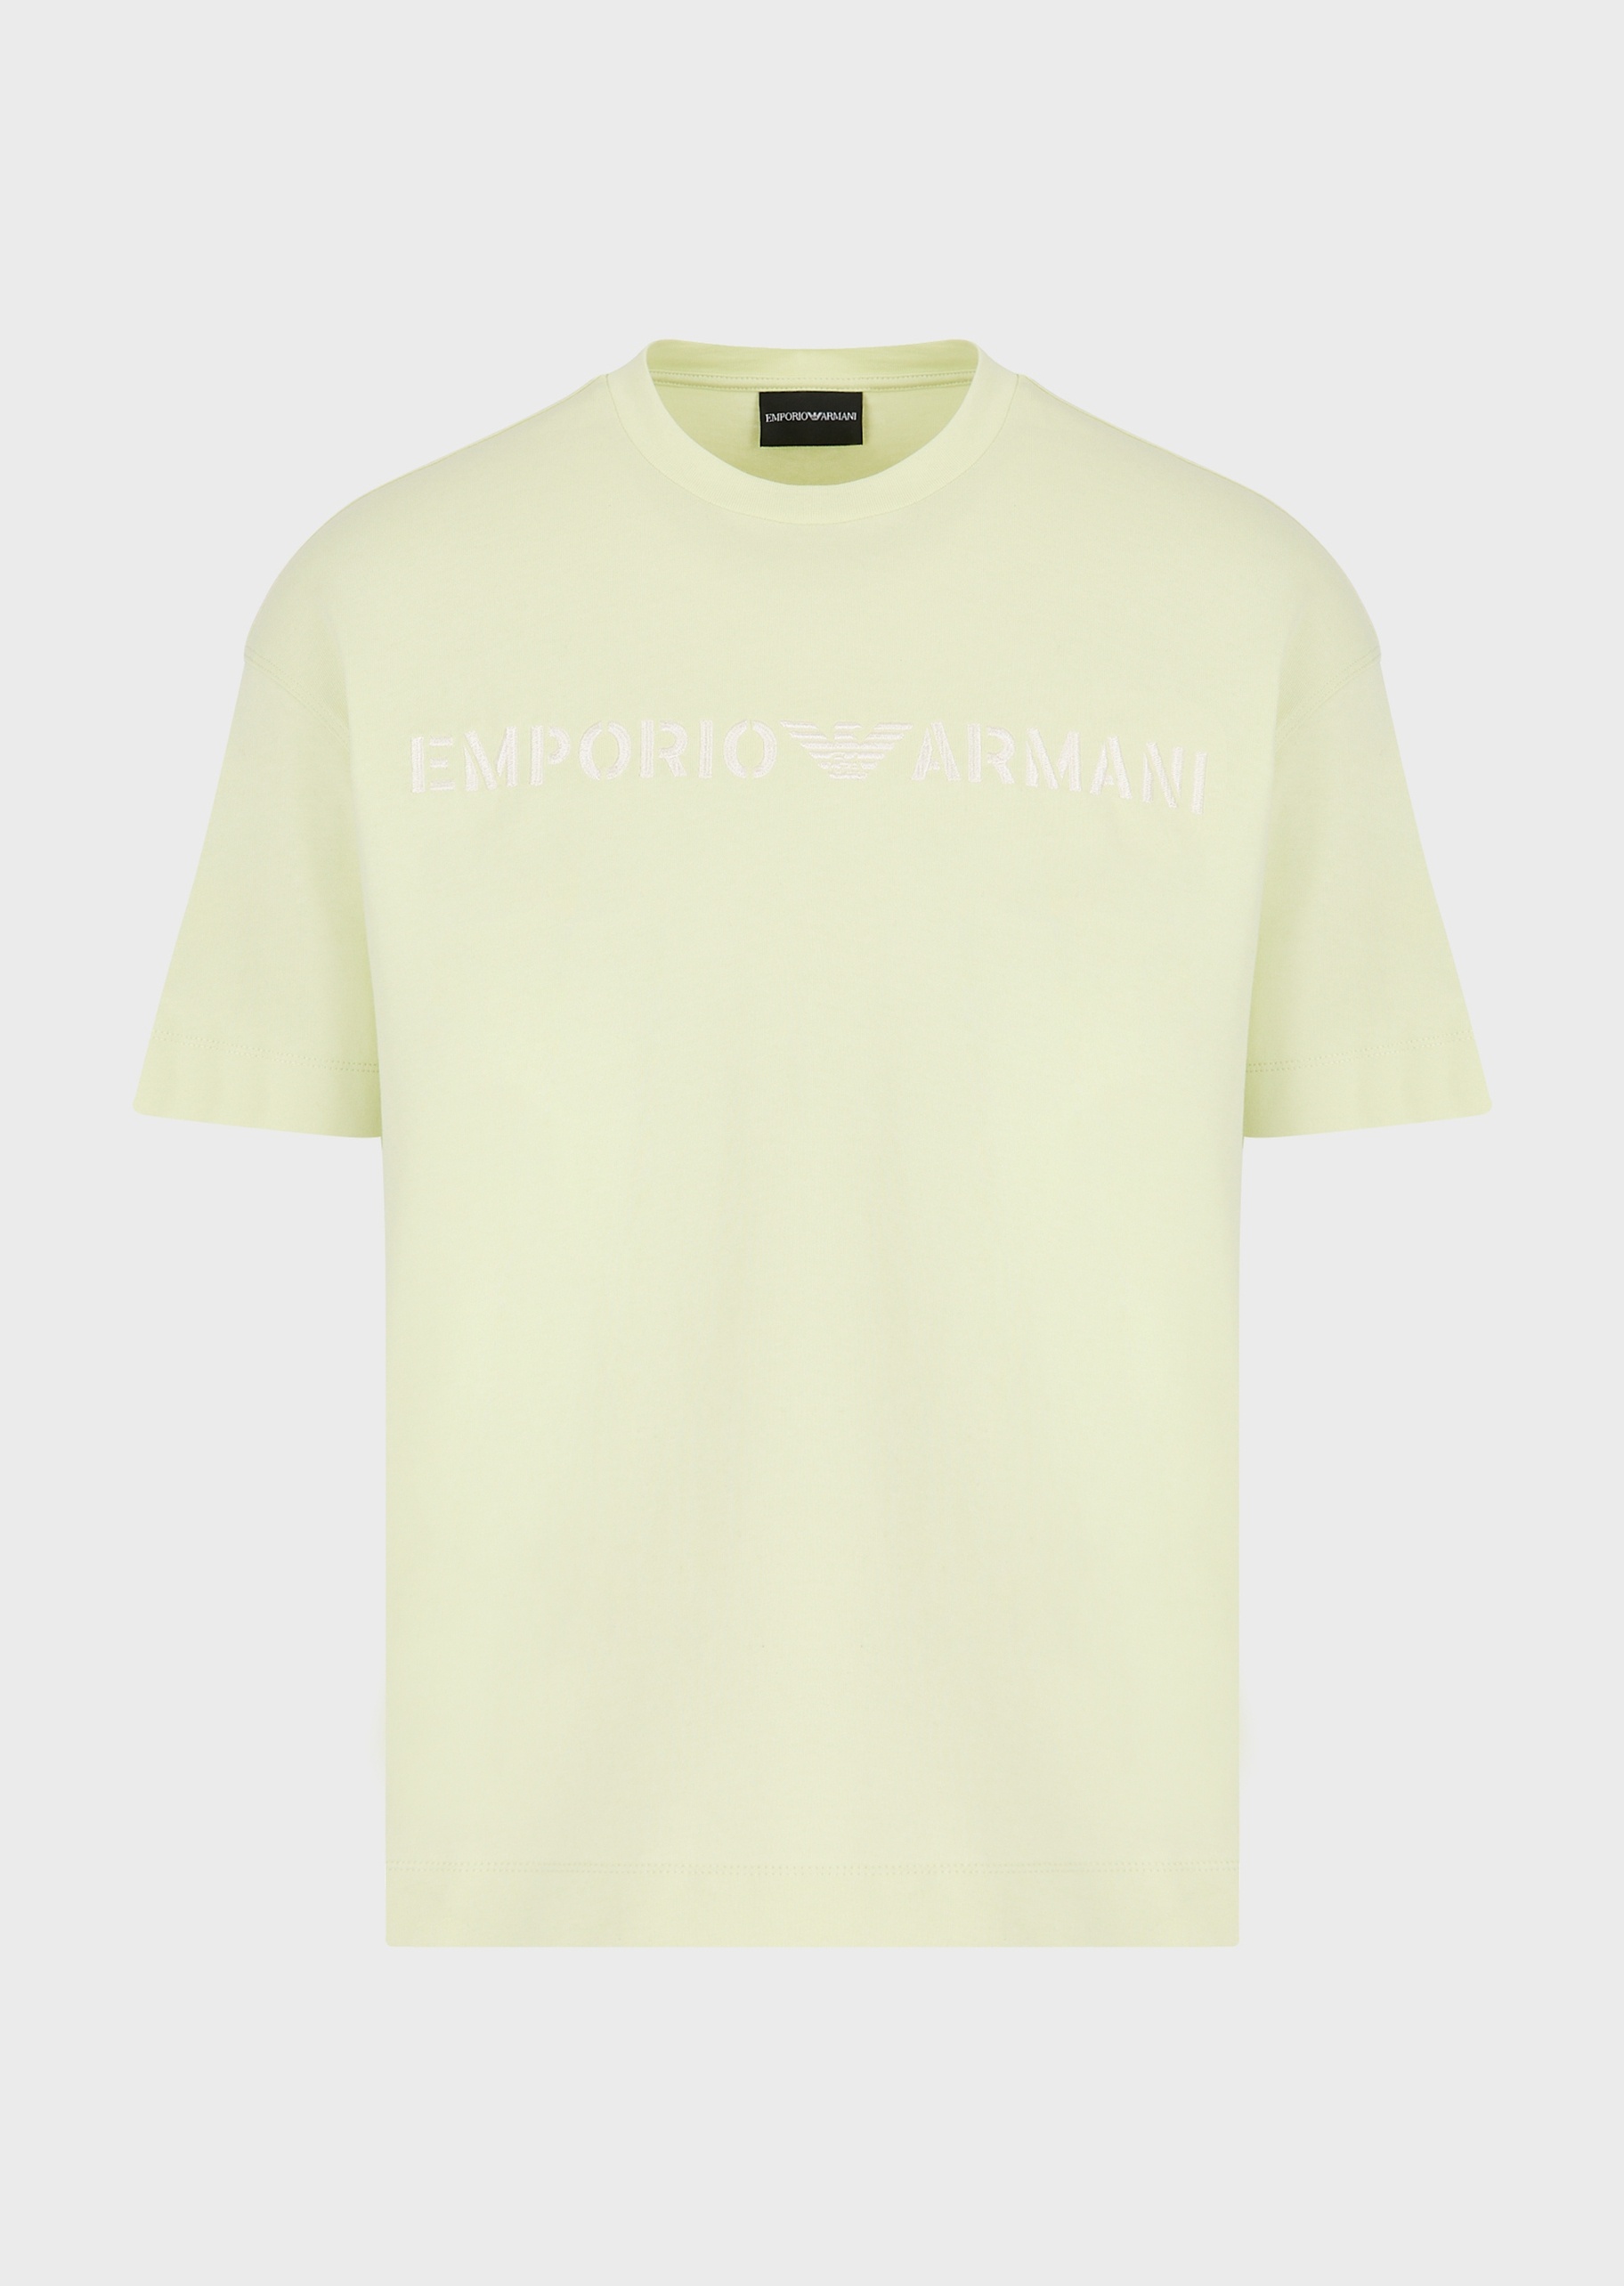 Emporio Armani 男士刺绣标识圆领短袖T恤